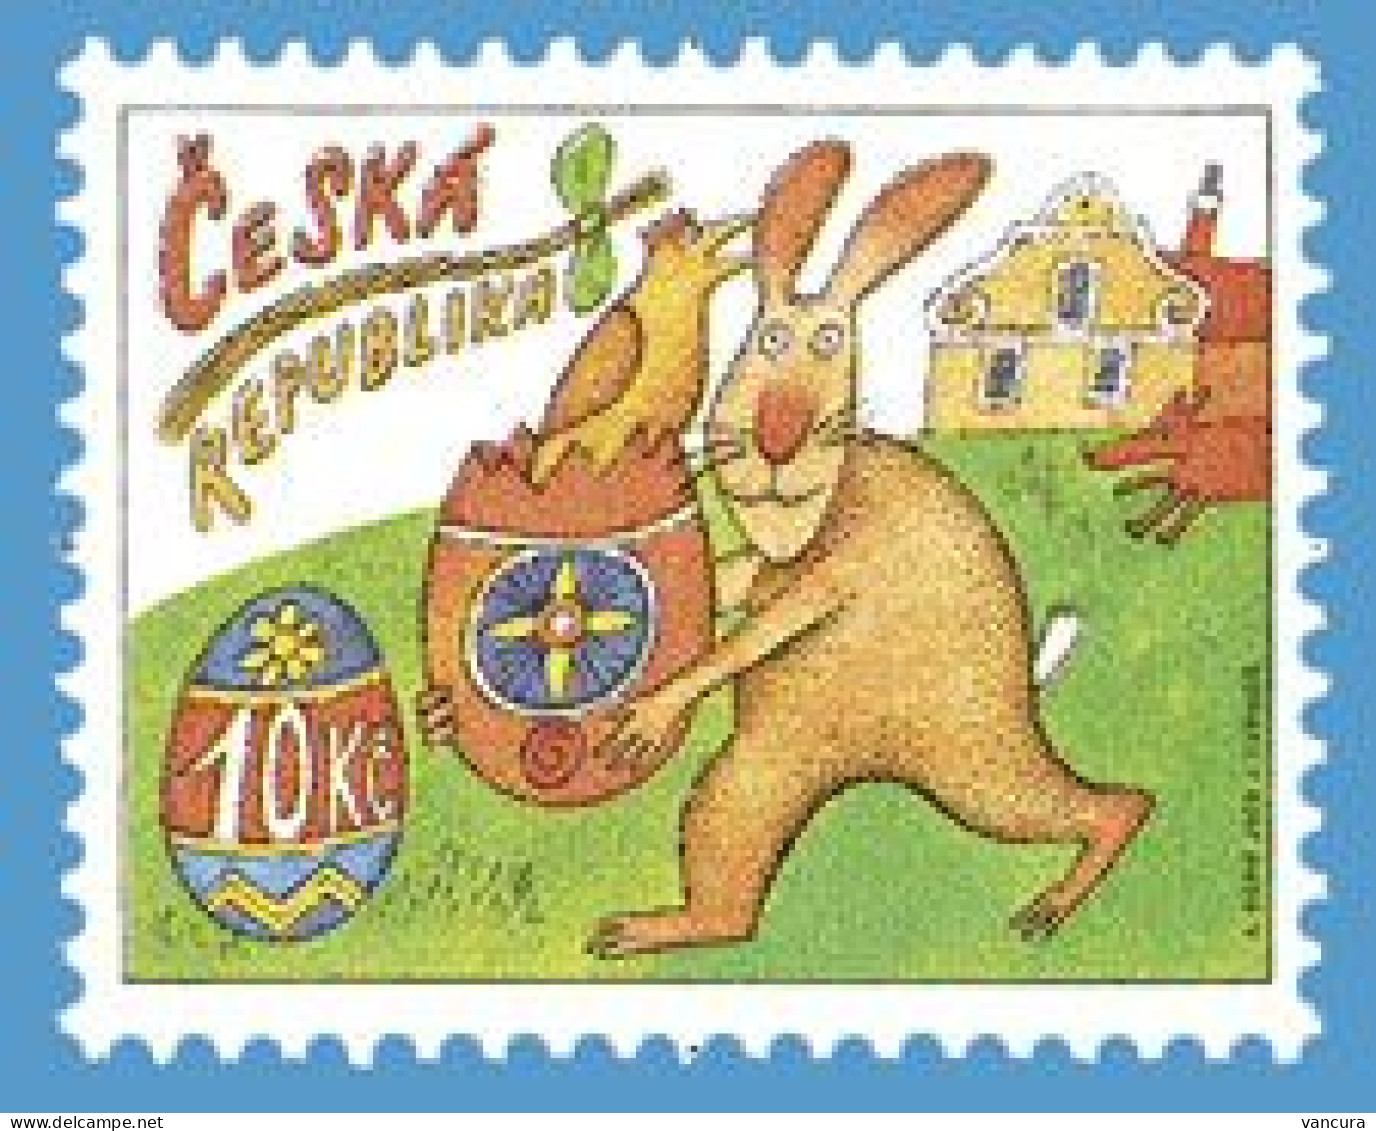 ** 590 Czech Republic Easter 2009 Hare - Pâques